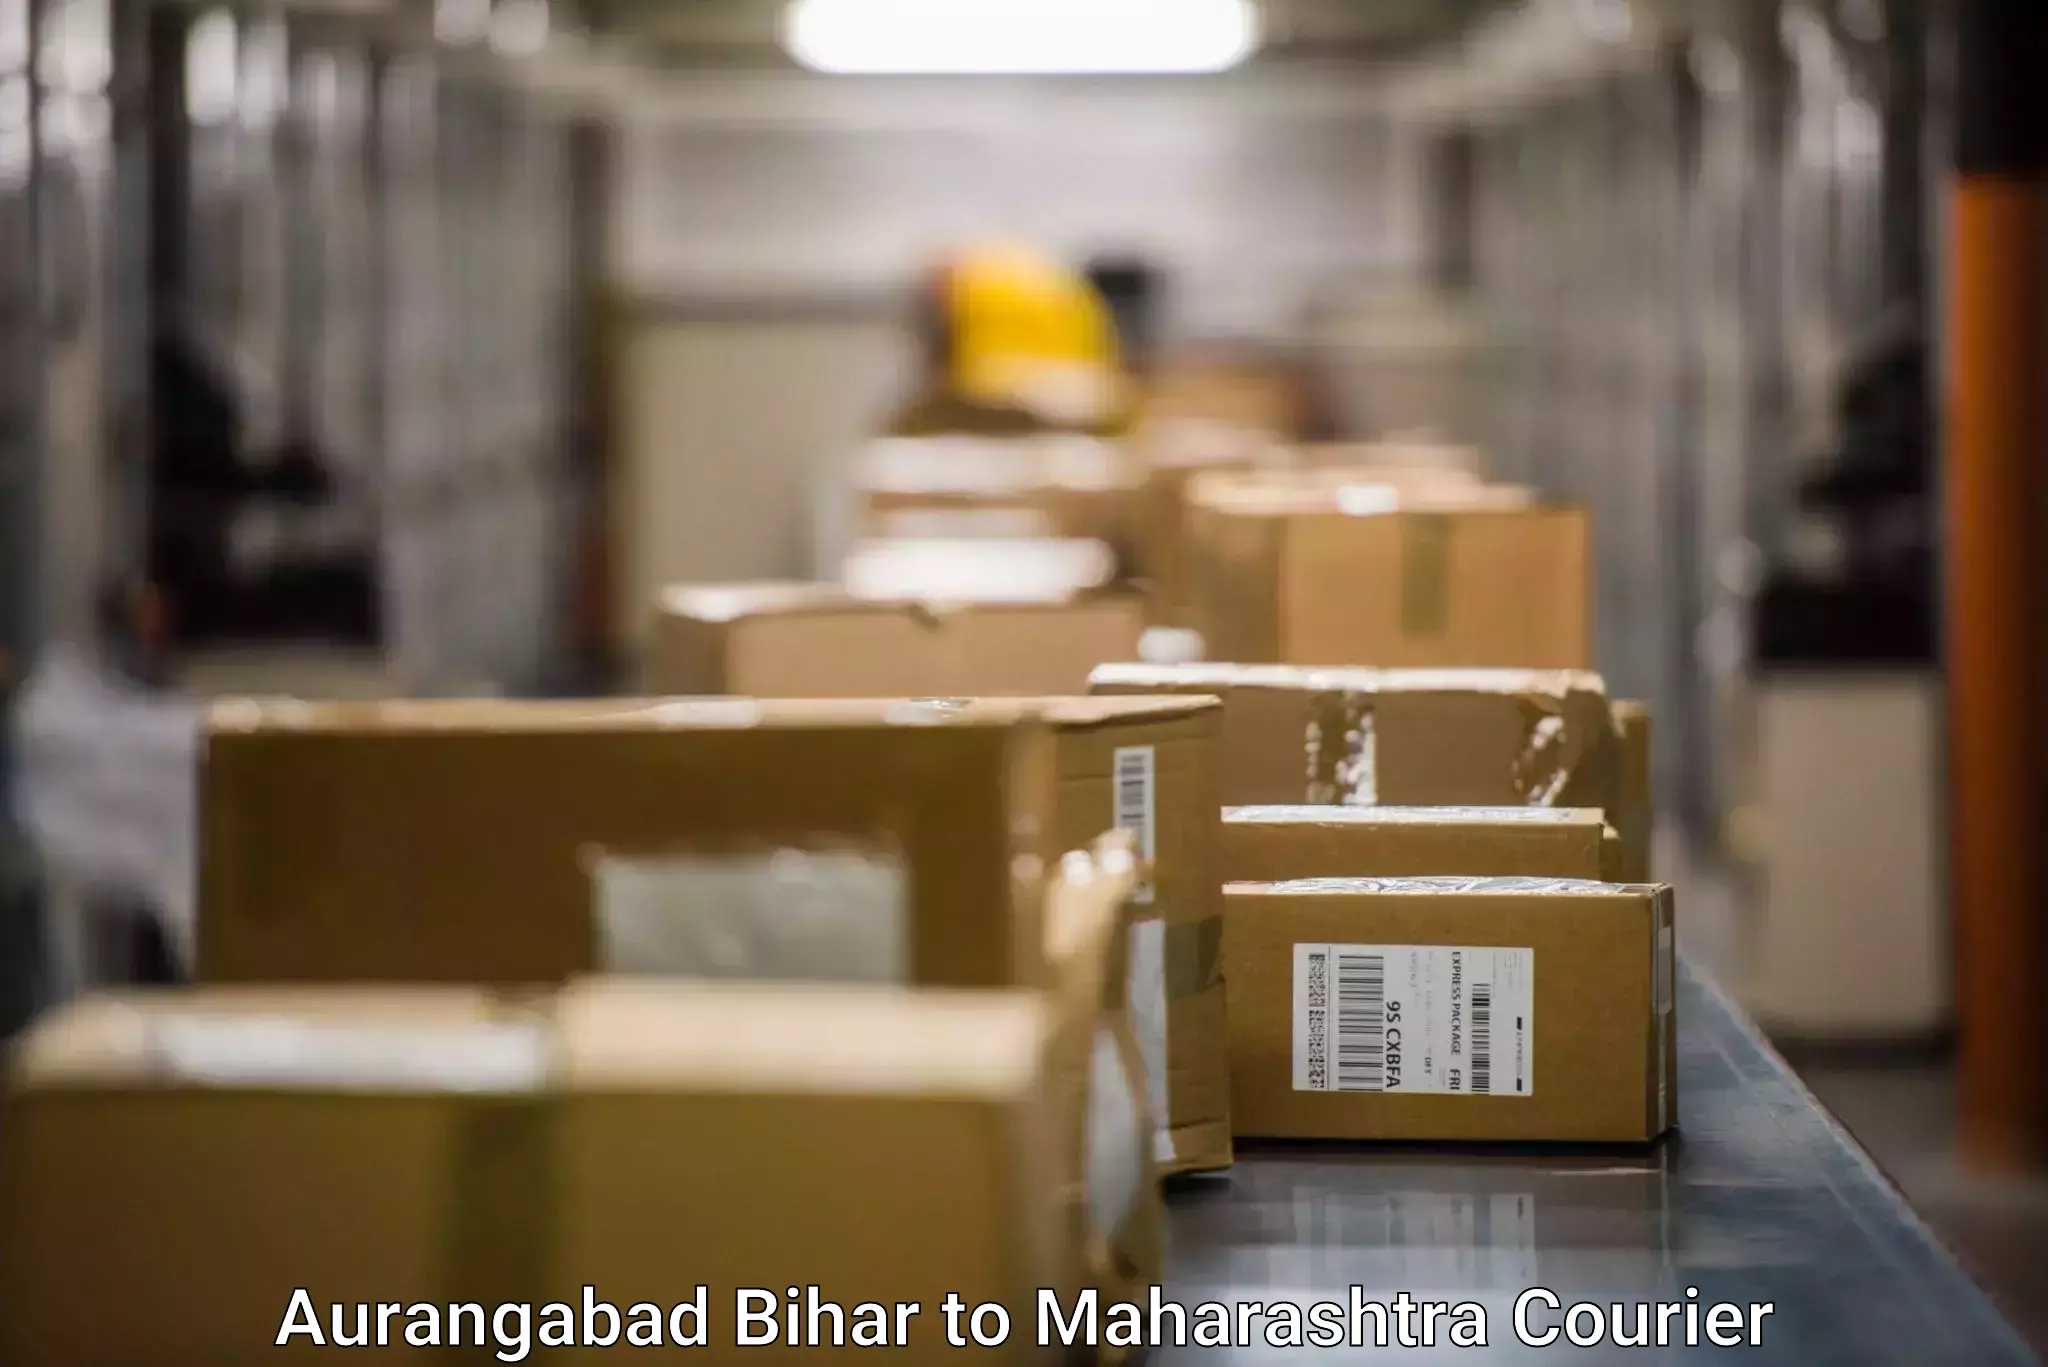 Tailored delivery services Aurangabad Bihar to Mumbai Port